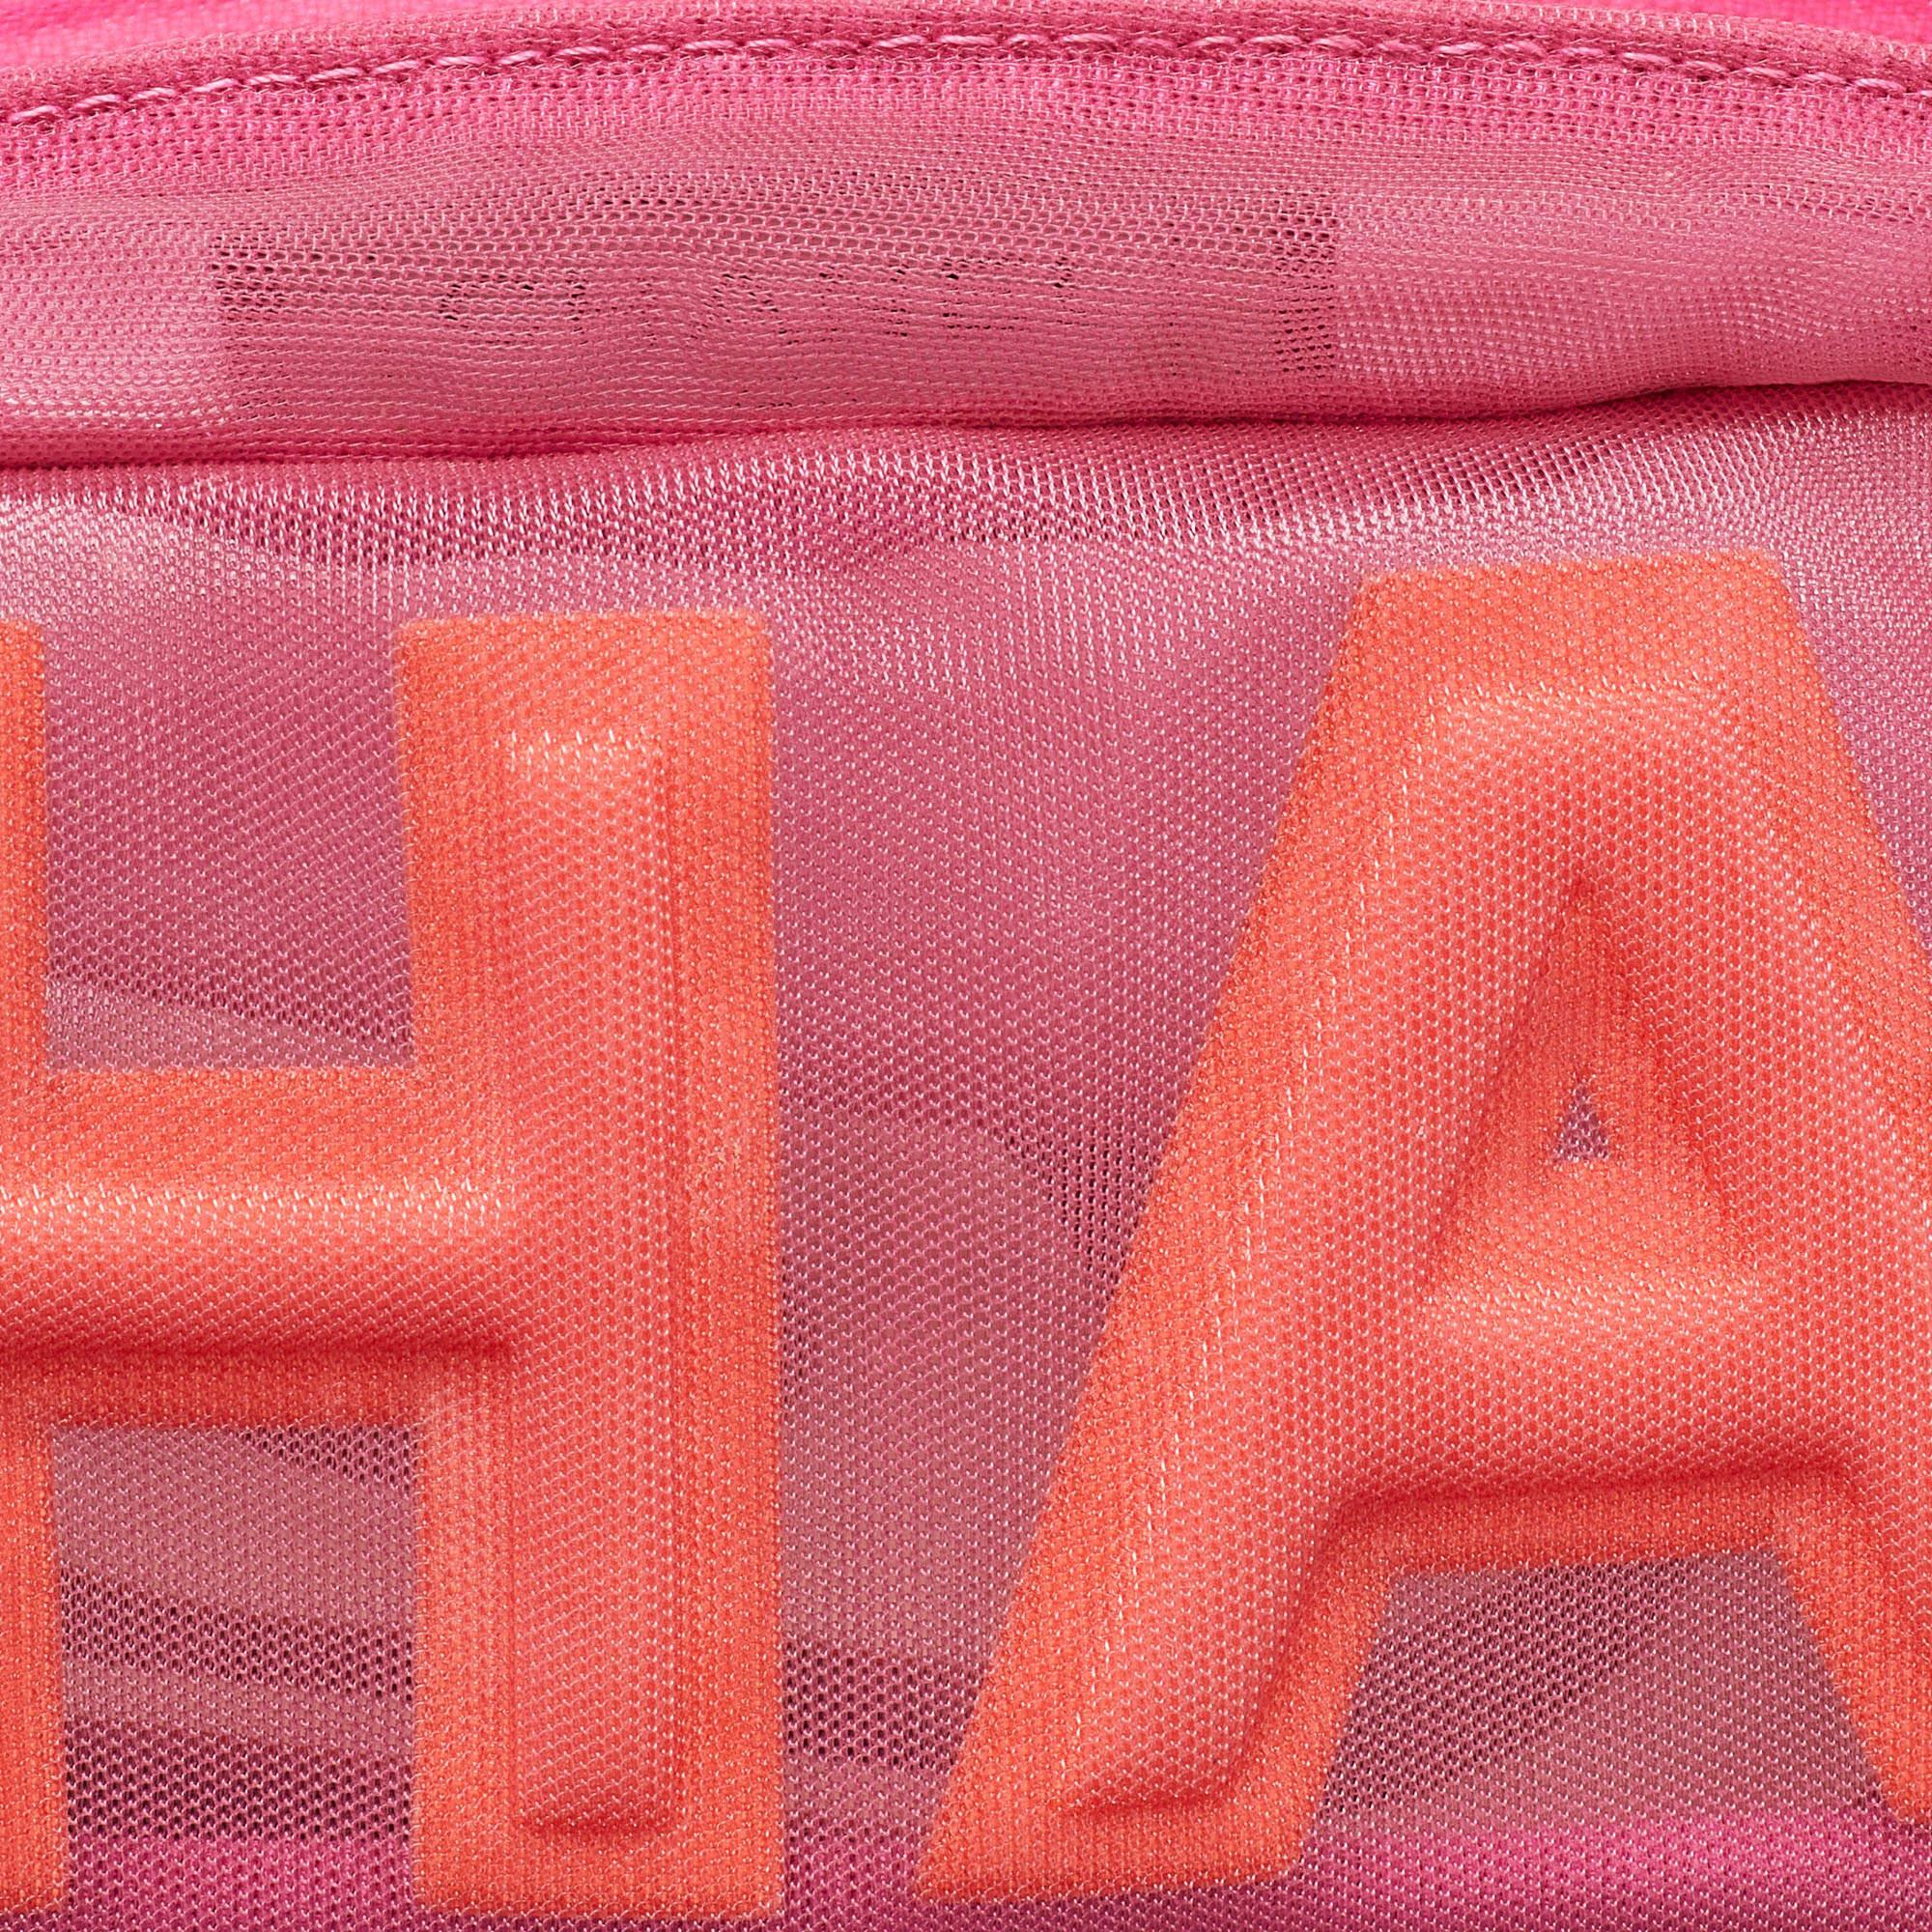 hot pink nylon bag